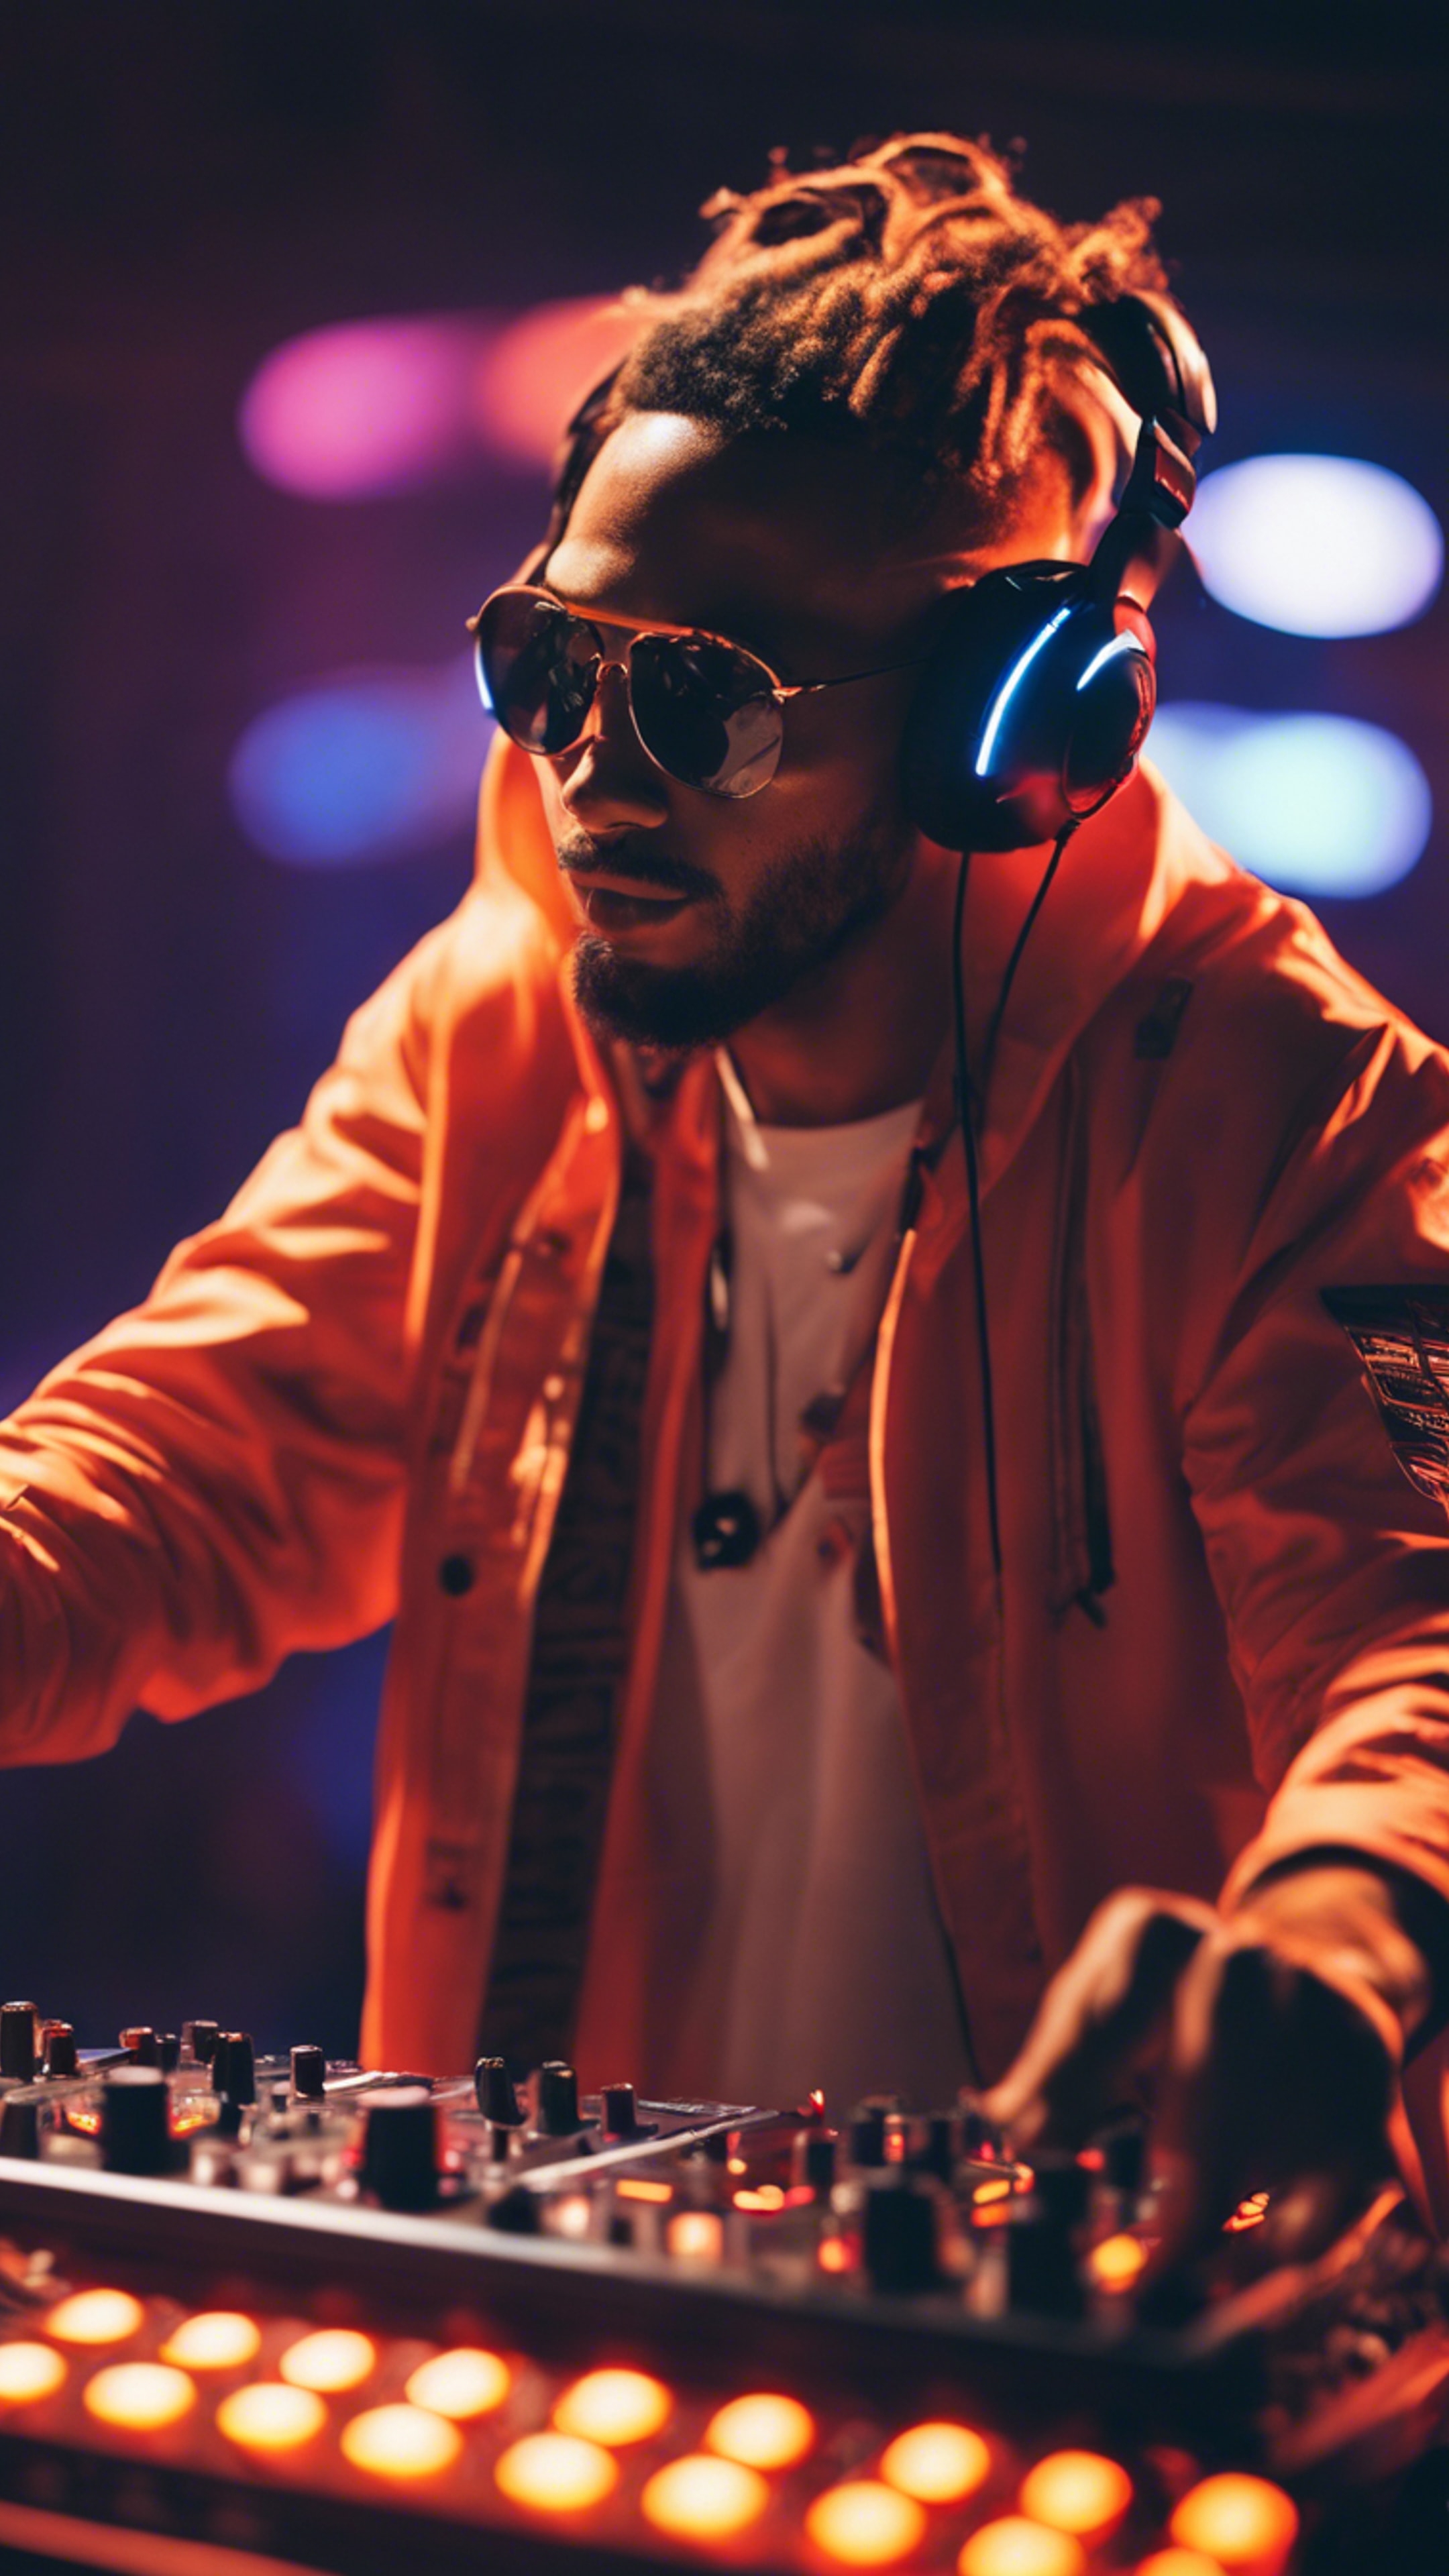 An energetic DJ at a music festival wearing neon orange headphones. Wallpaper[135547dc2eef4b3588bf]